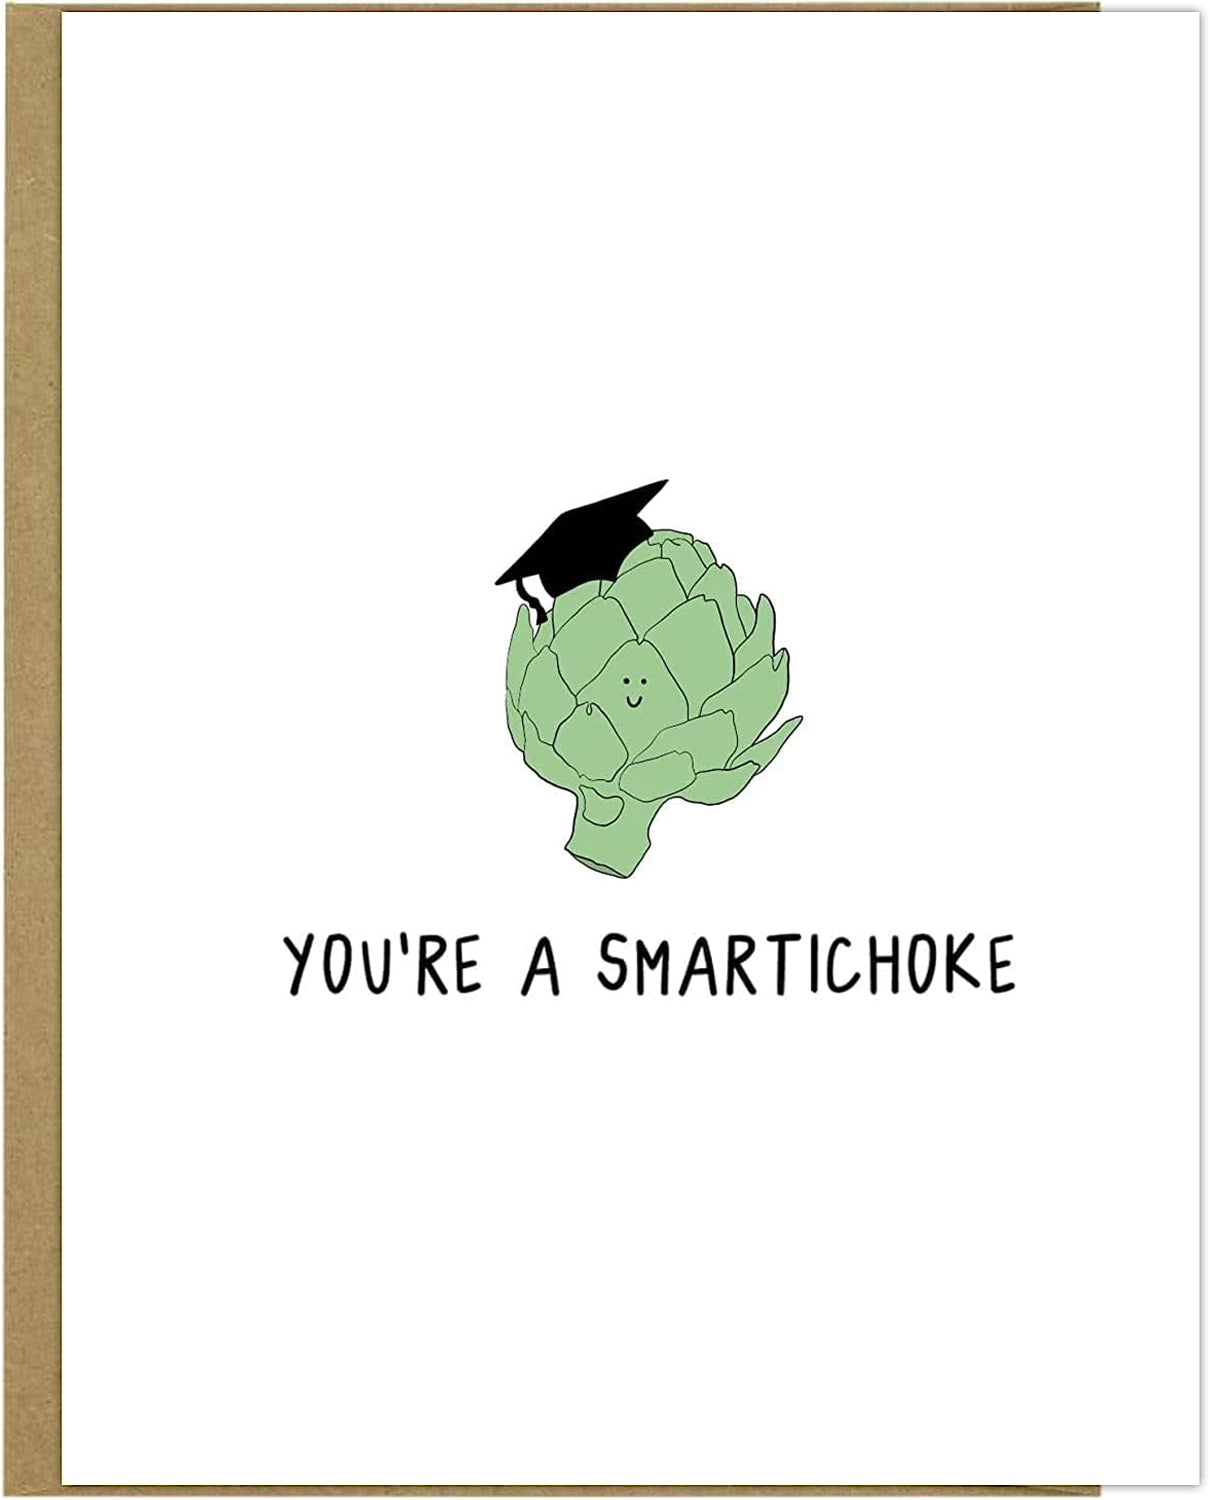 You're a rockdoodles Smartichoke card.